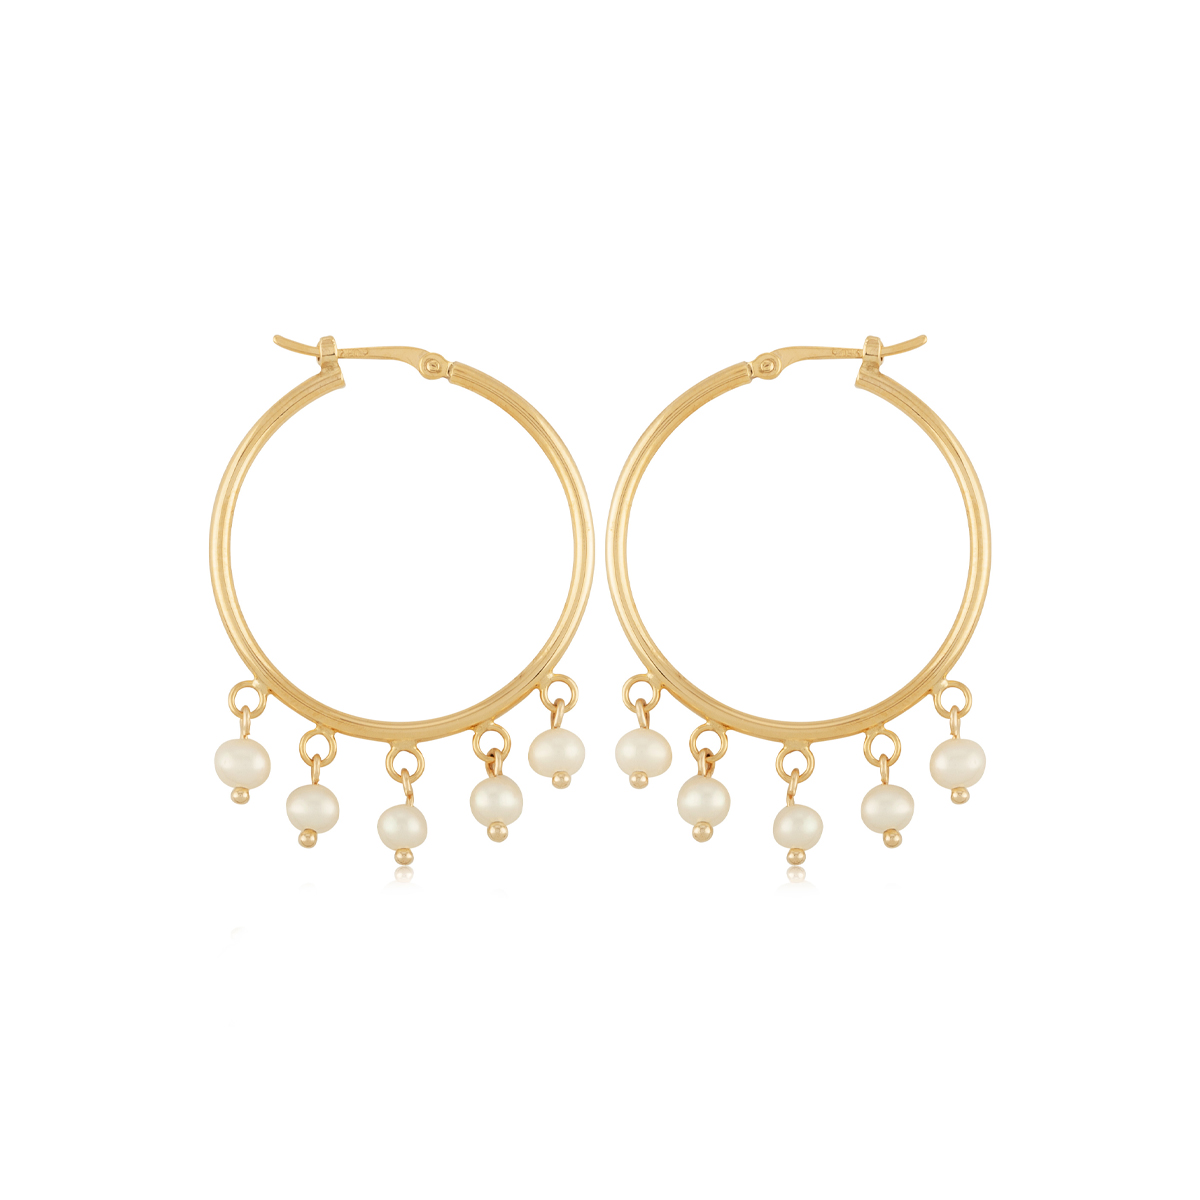 14K Yellow Gold Hoop Earrings with Pearl Dangles